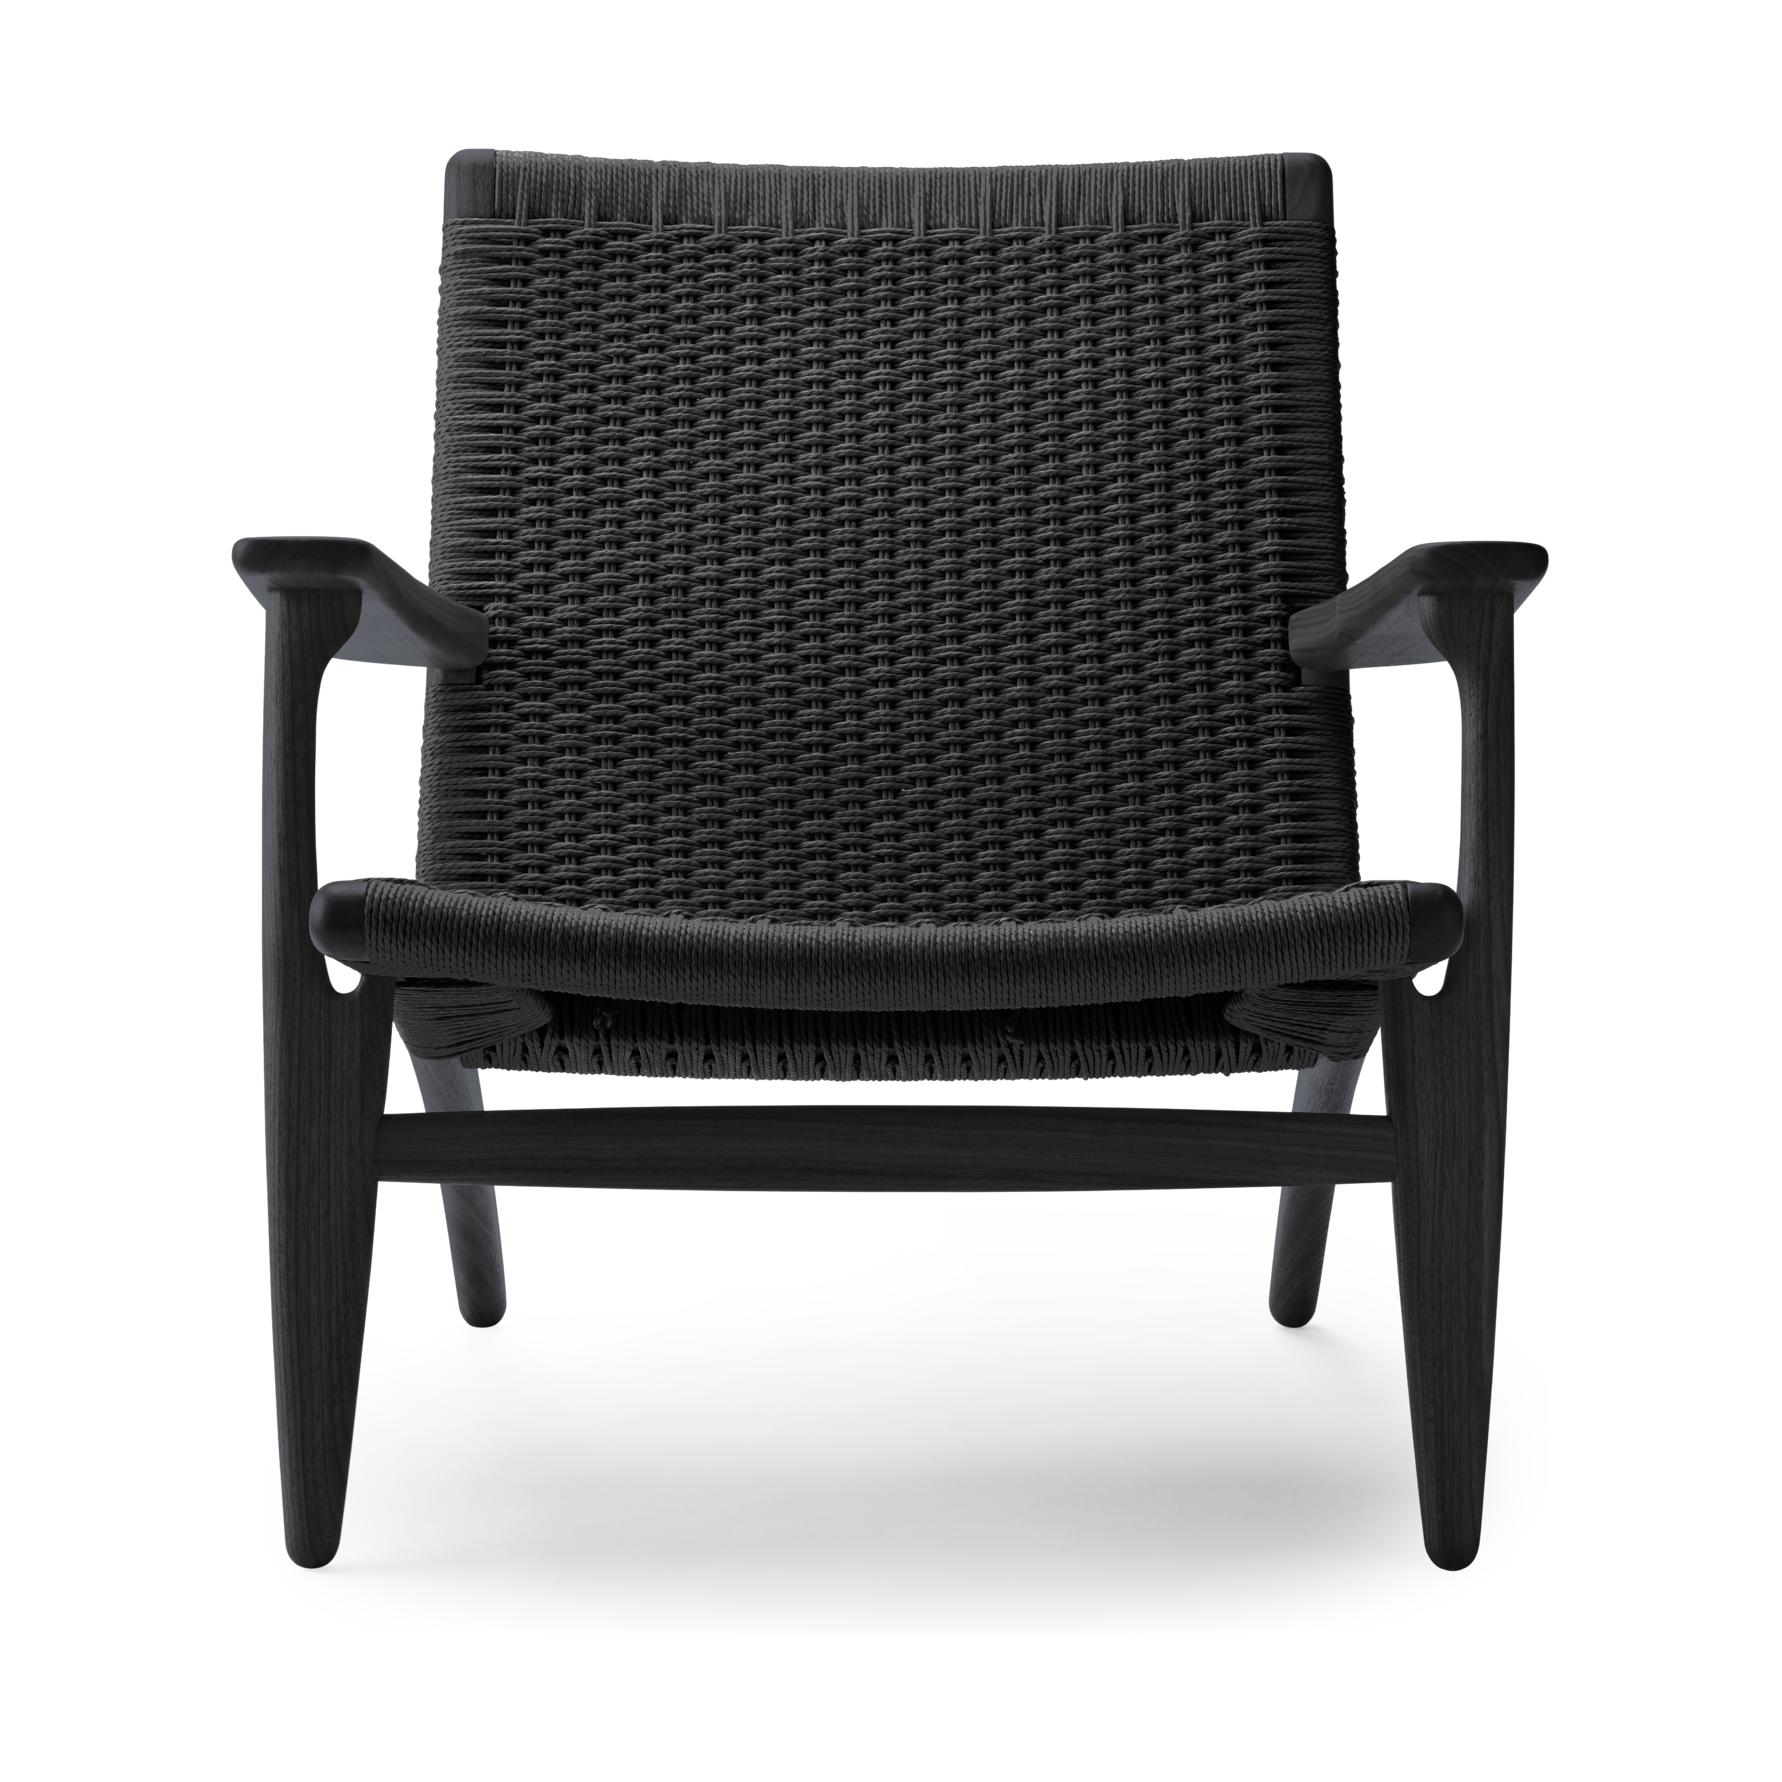 Carl Hansen CH25 Lounge -stoel, gekleurd eiken/zwart papiersnoer